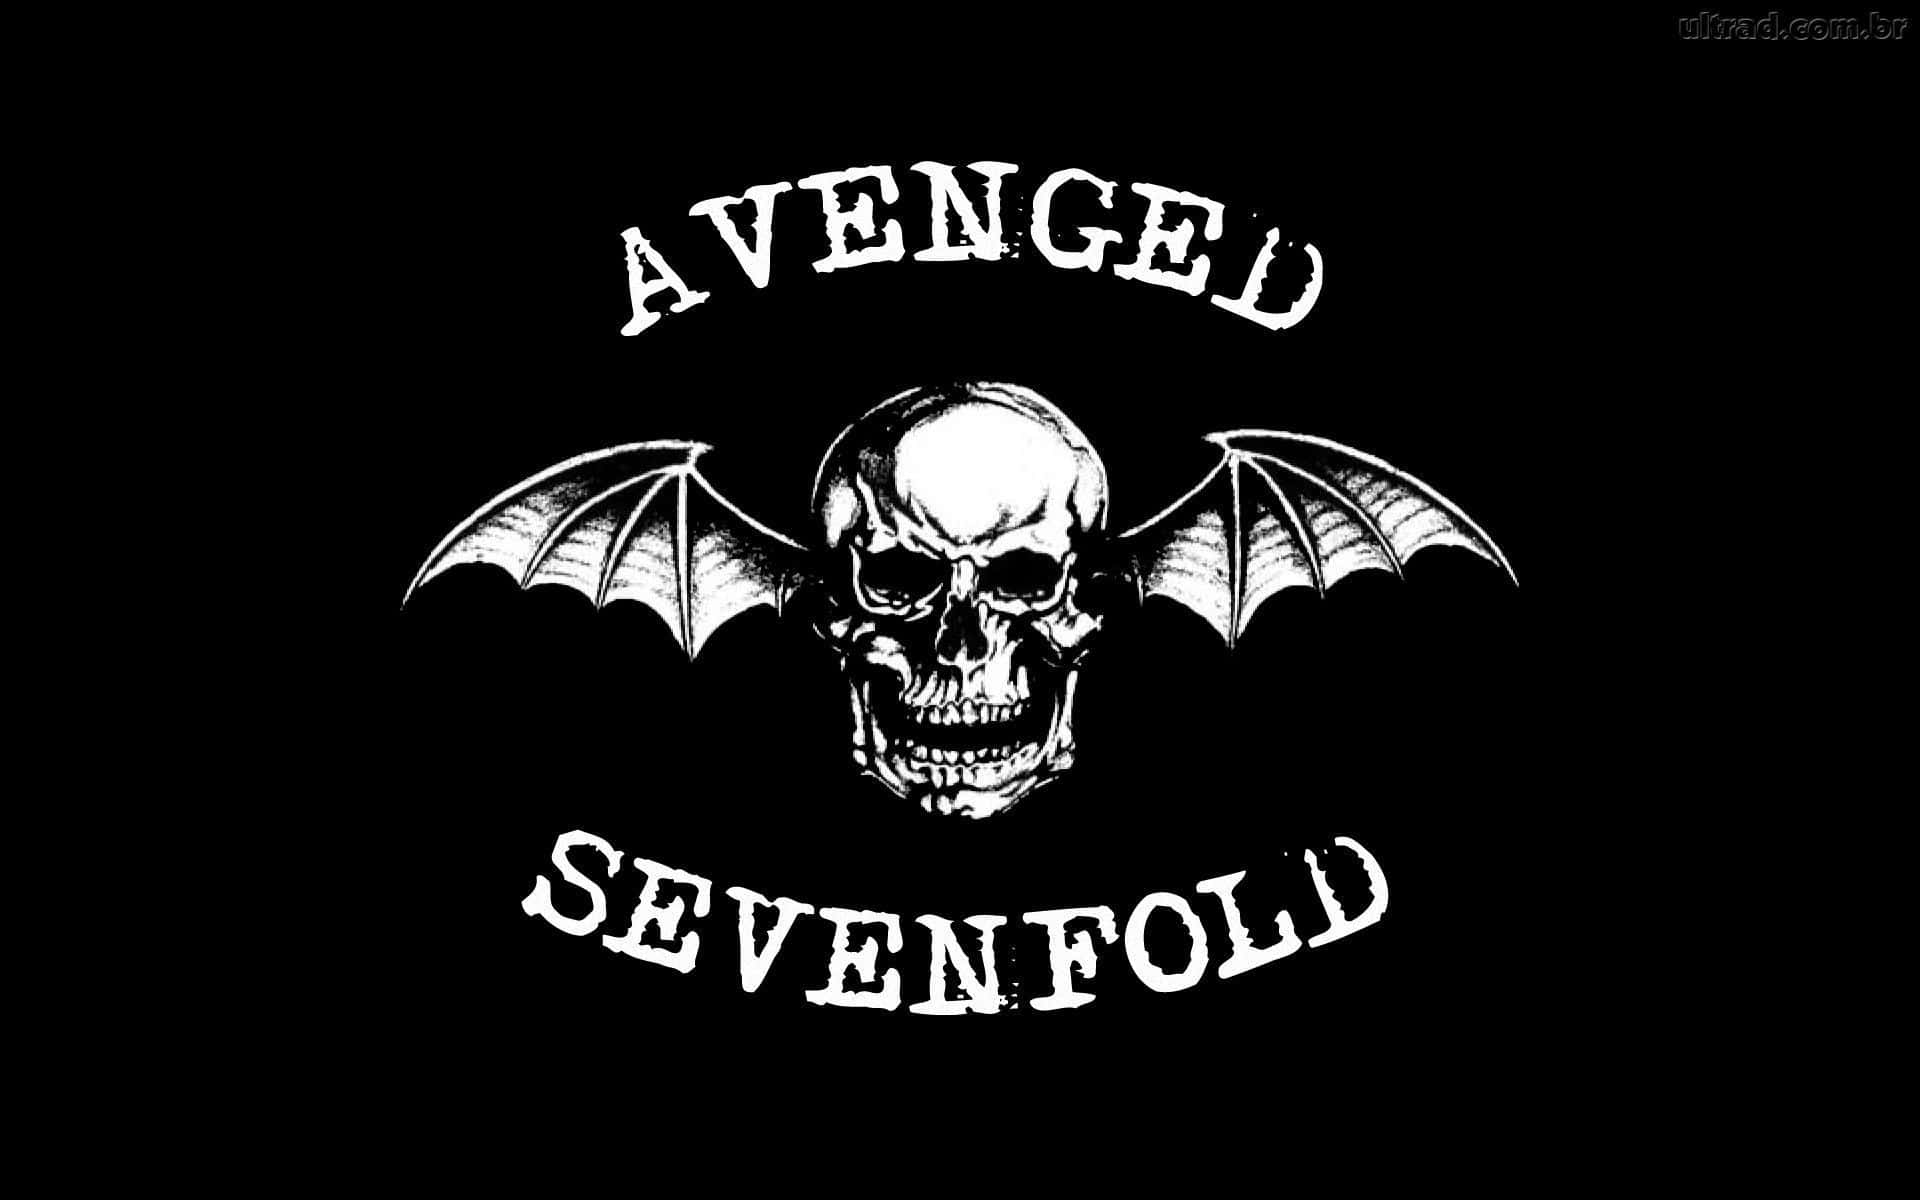 Avengedsevenfold-logo På En Sort Baggrund. Wallpaper